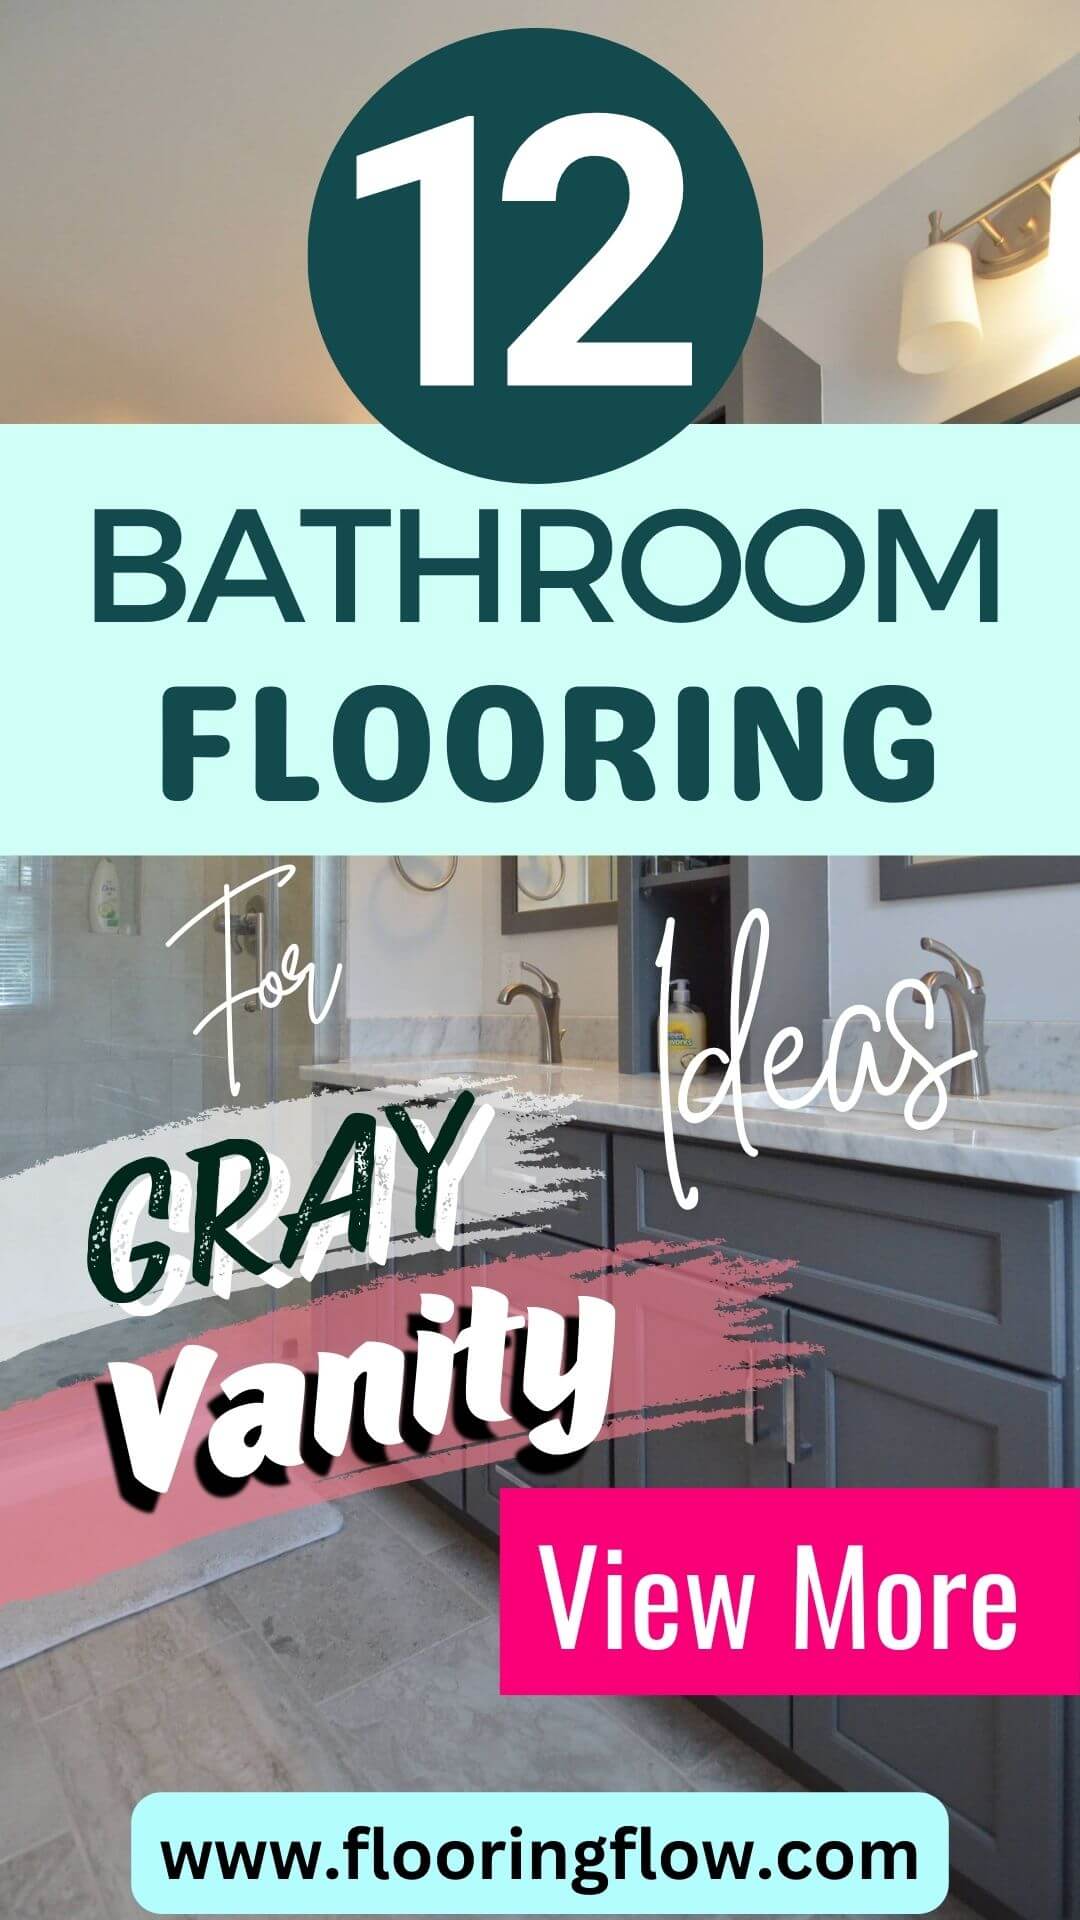 Bathroom flooring ideas for gray vanity